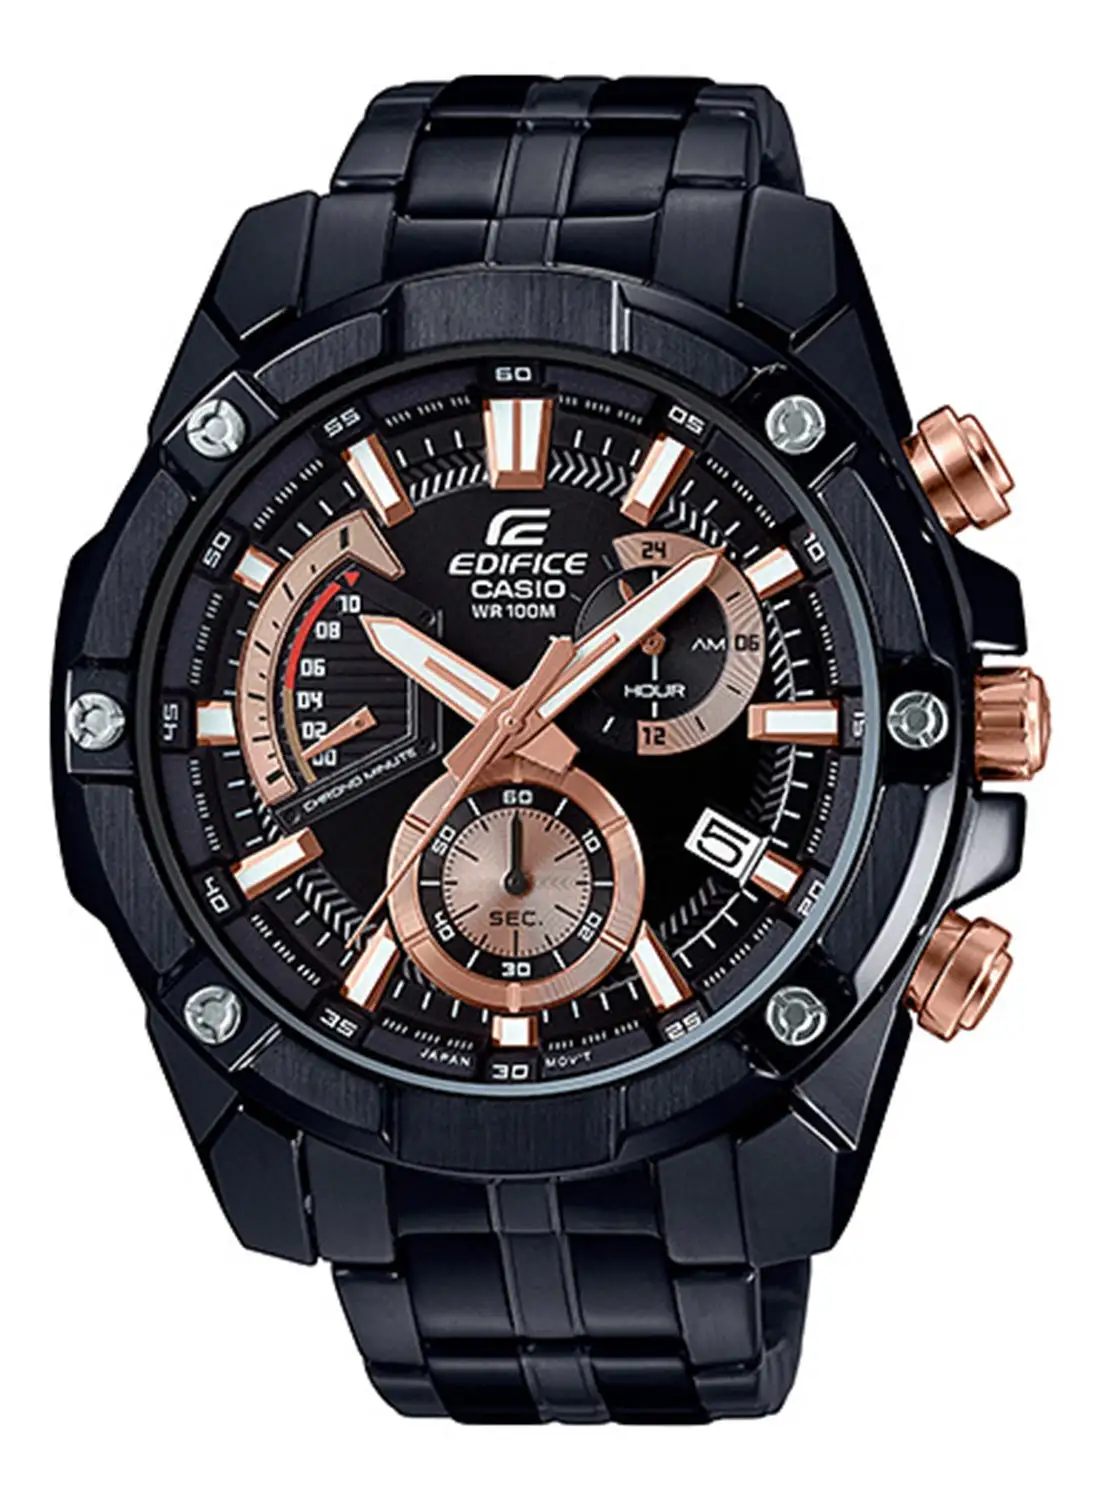 CASIO Men's Analog Stainless Steel Wrist Watch EFR-559DC-1AVUDF - 42 Mm